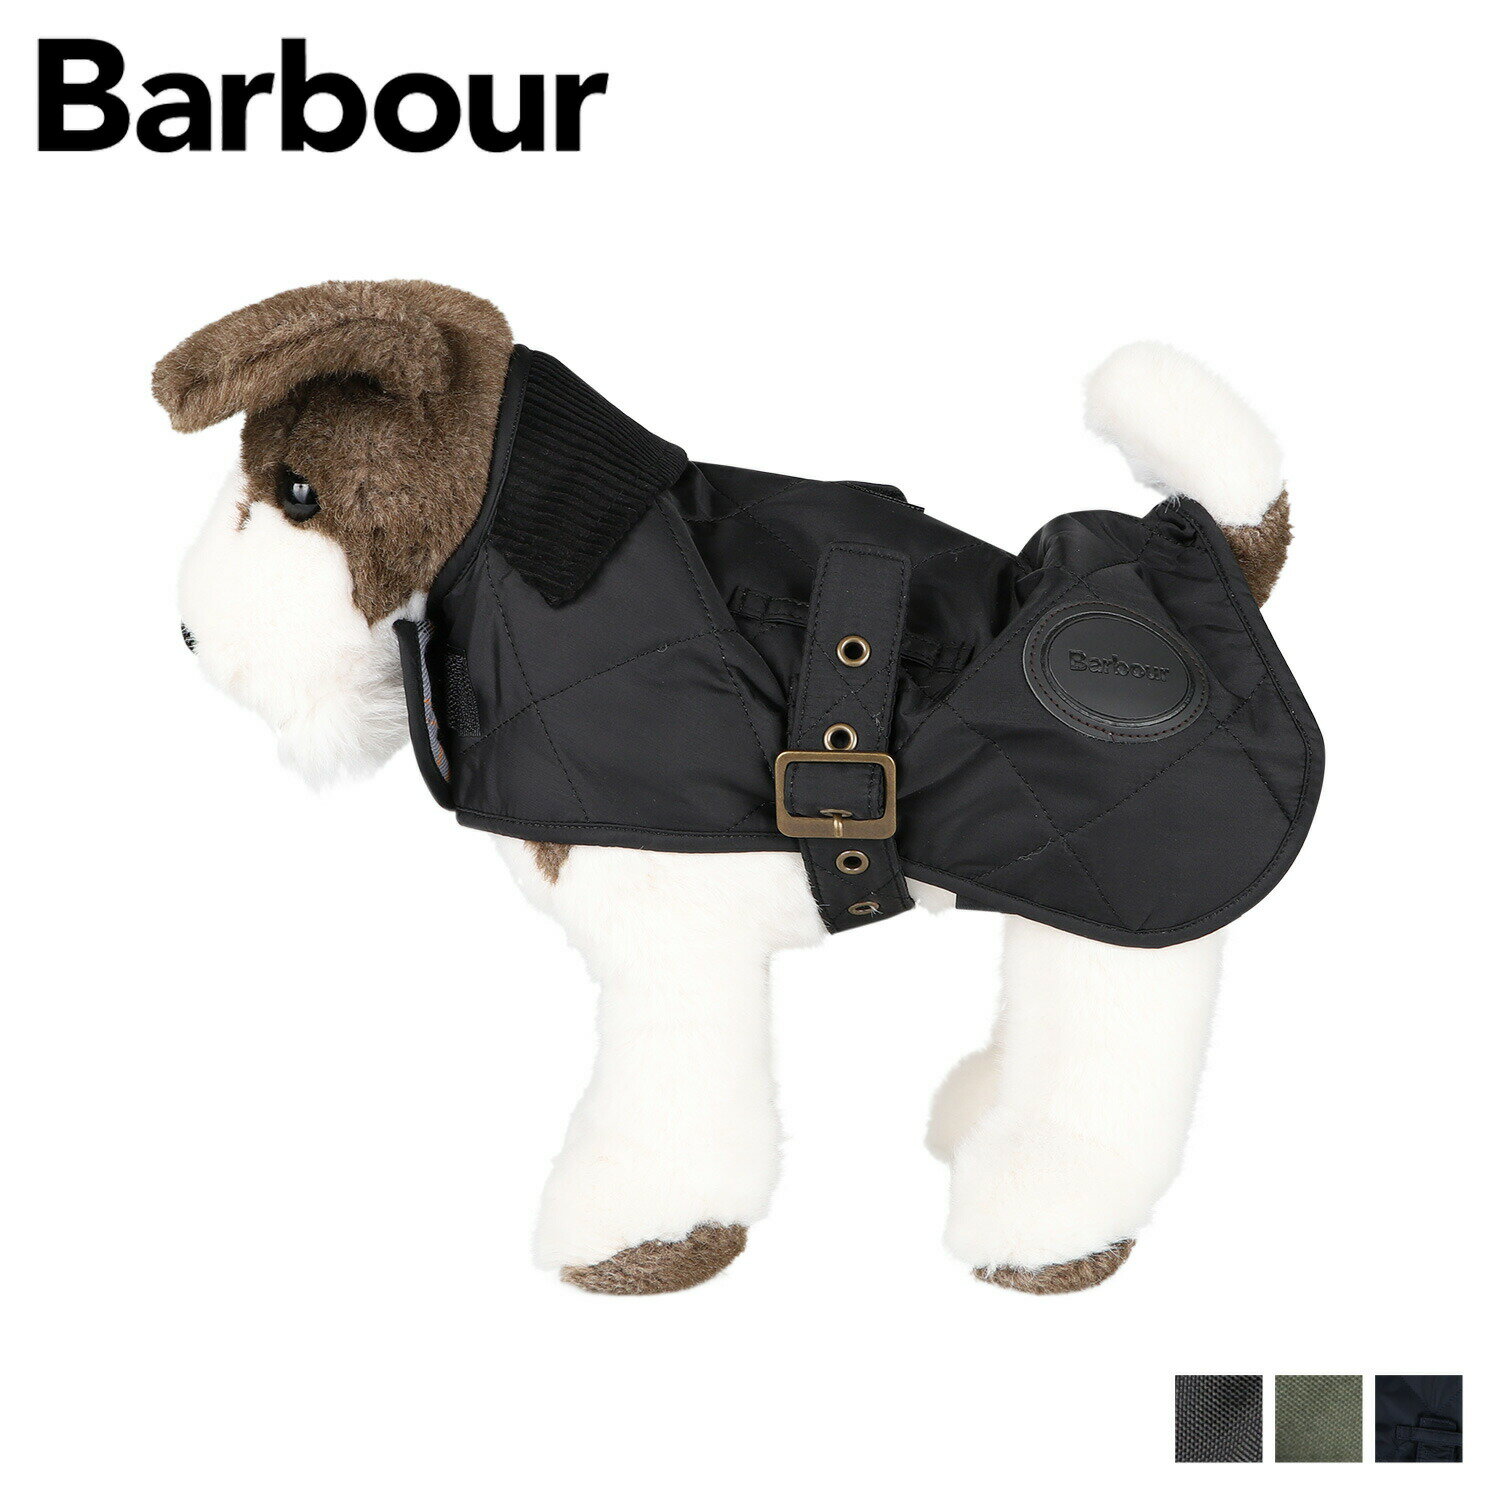 Barbour Quilted Dog Coat バブアー ドッグウェア カジュアル 犬服 コート ブラック オリーブ ネイビー 黒 DCO0004